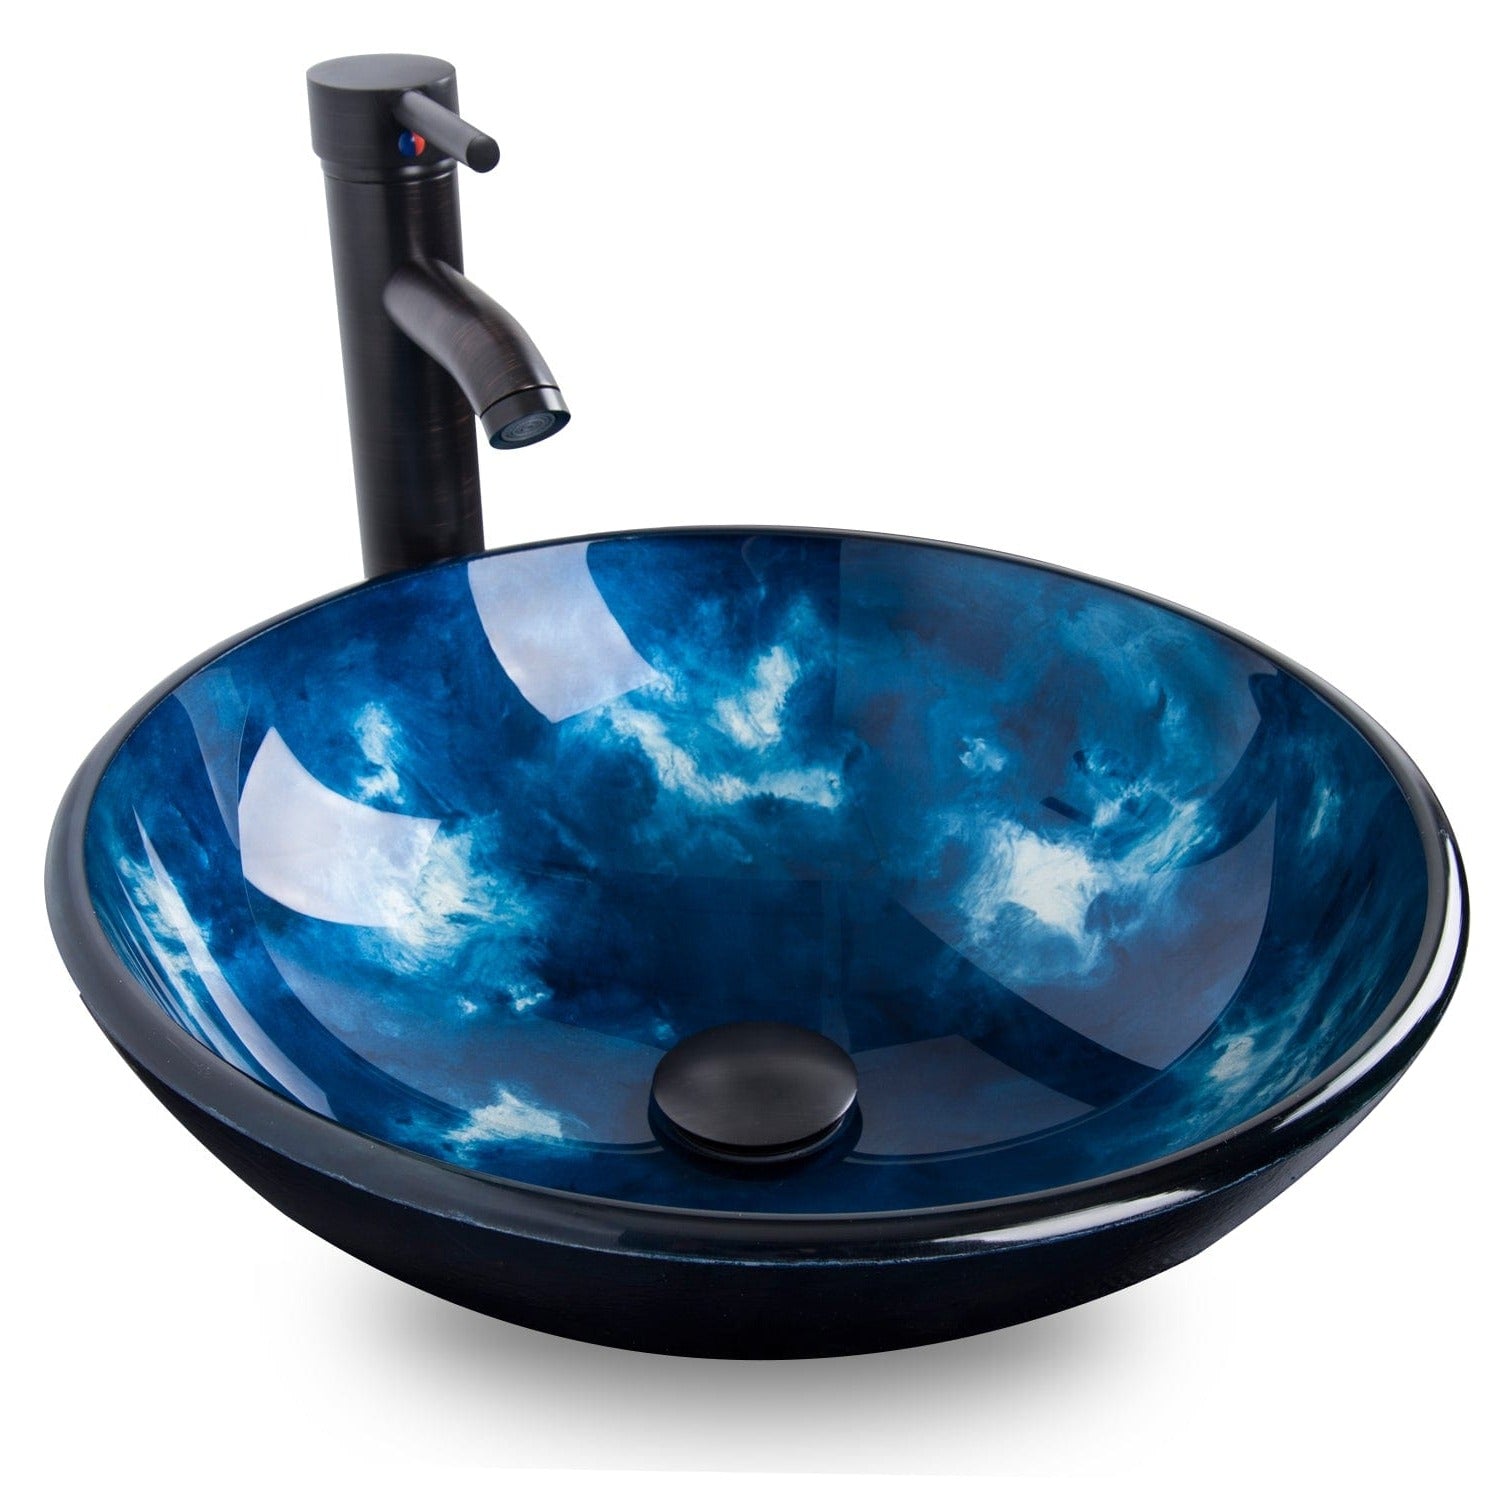 Elecwish Artistic Vessel Sink Bathroom Glass Bowl Faucet Drain Combo,Ocean Blue